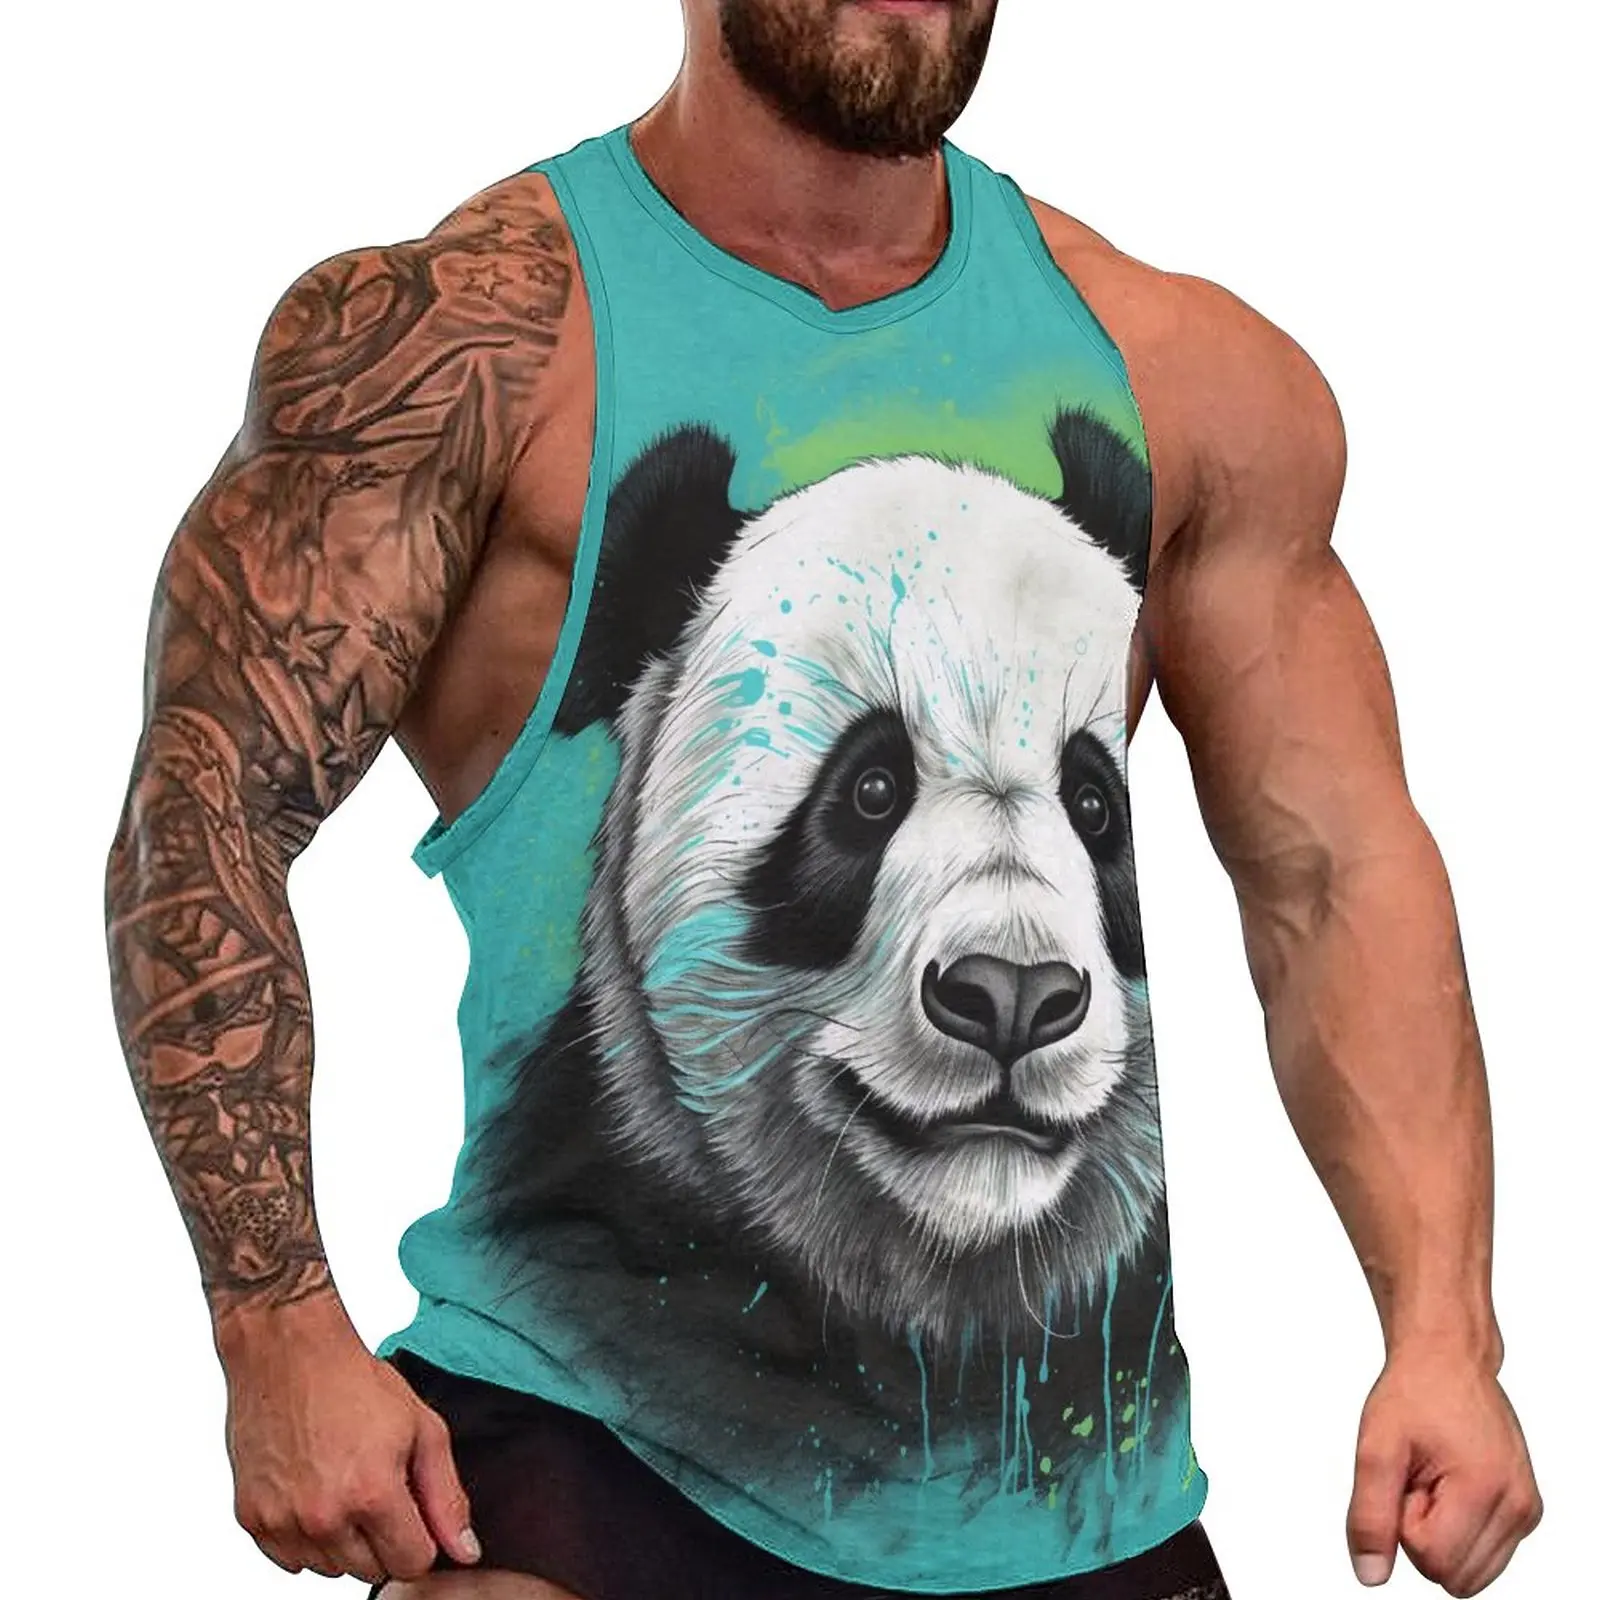 

Panda Tank Top Man Gouache Realism Tops Beach Graphic Workout Cool Oversized Sleeveless Vests